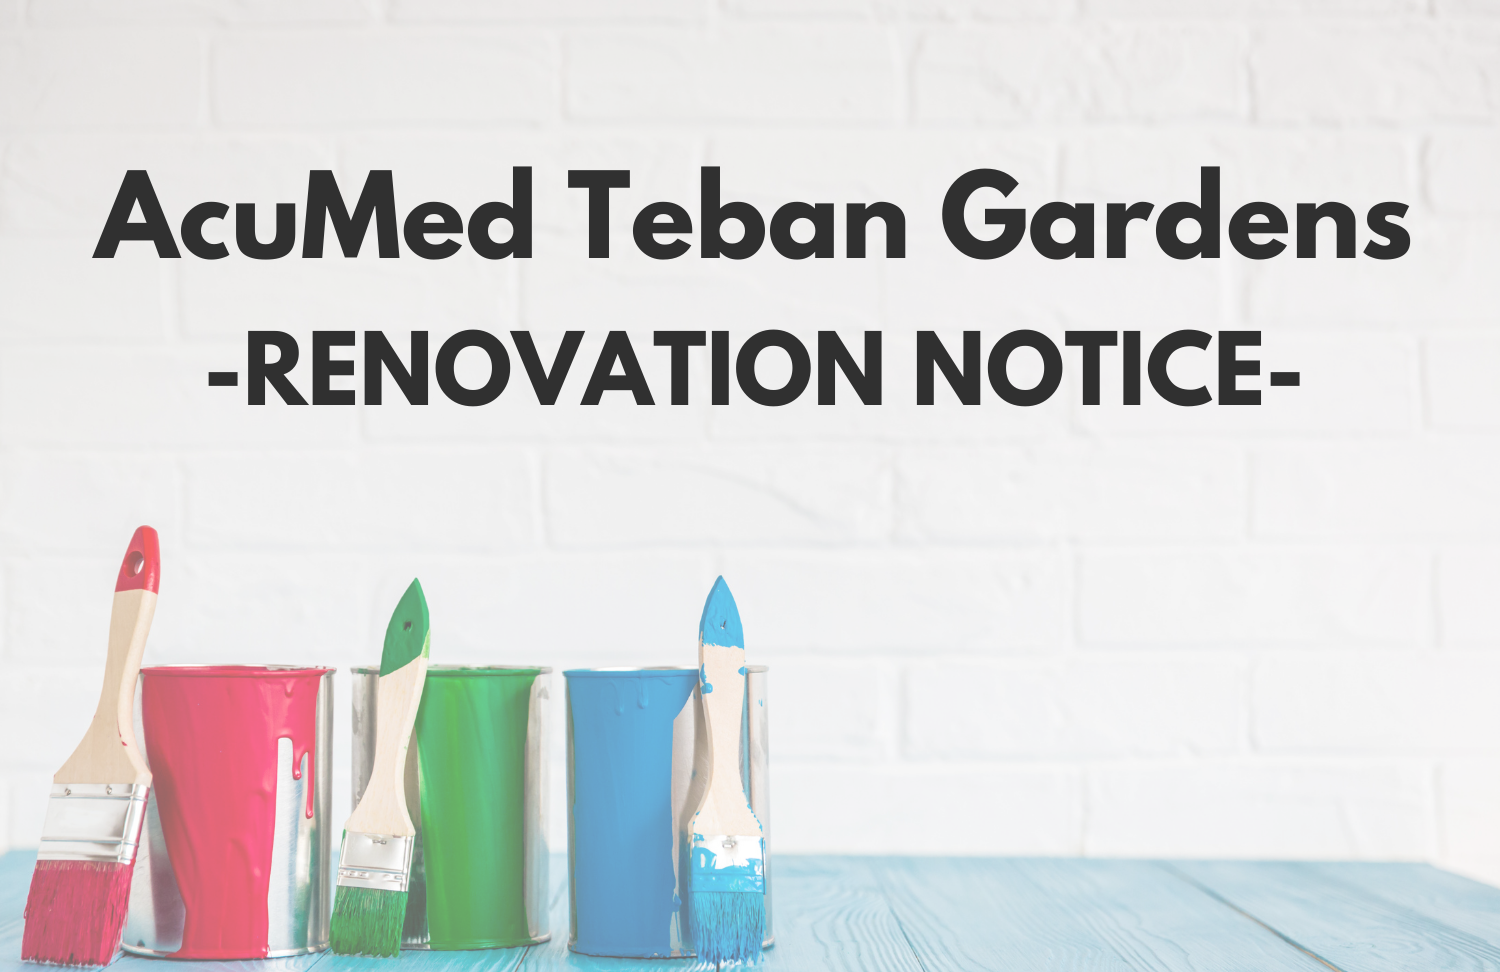 Renovation Notice for AcuMed Teban Gardens